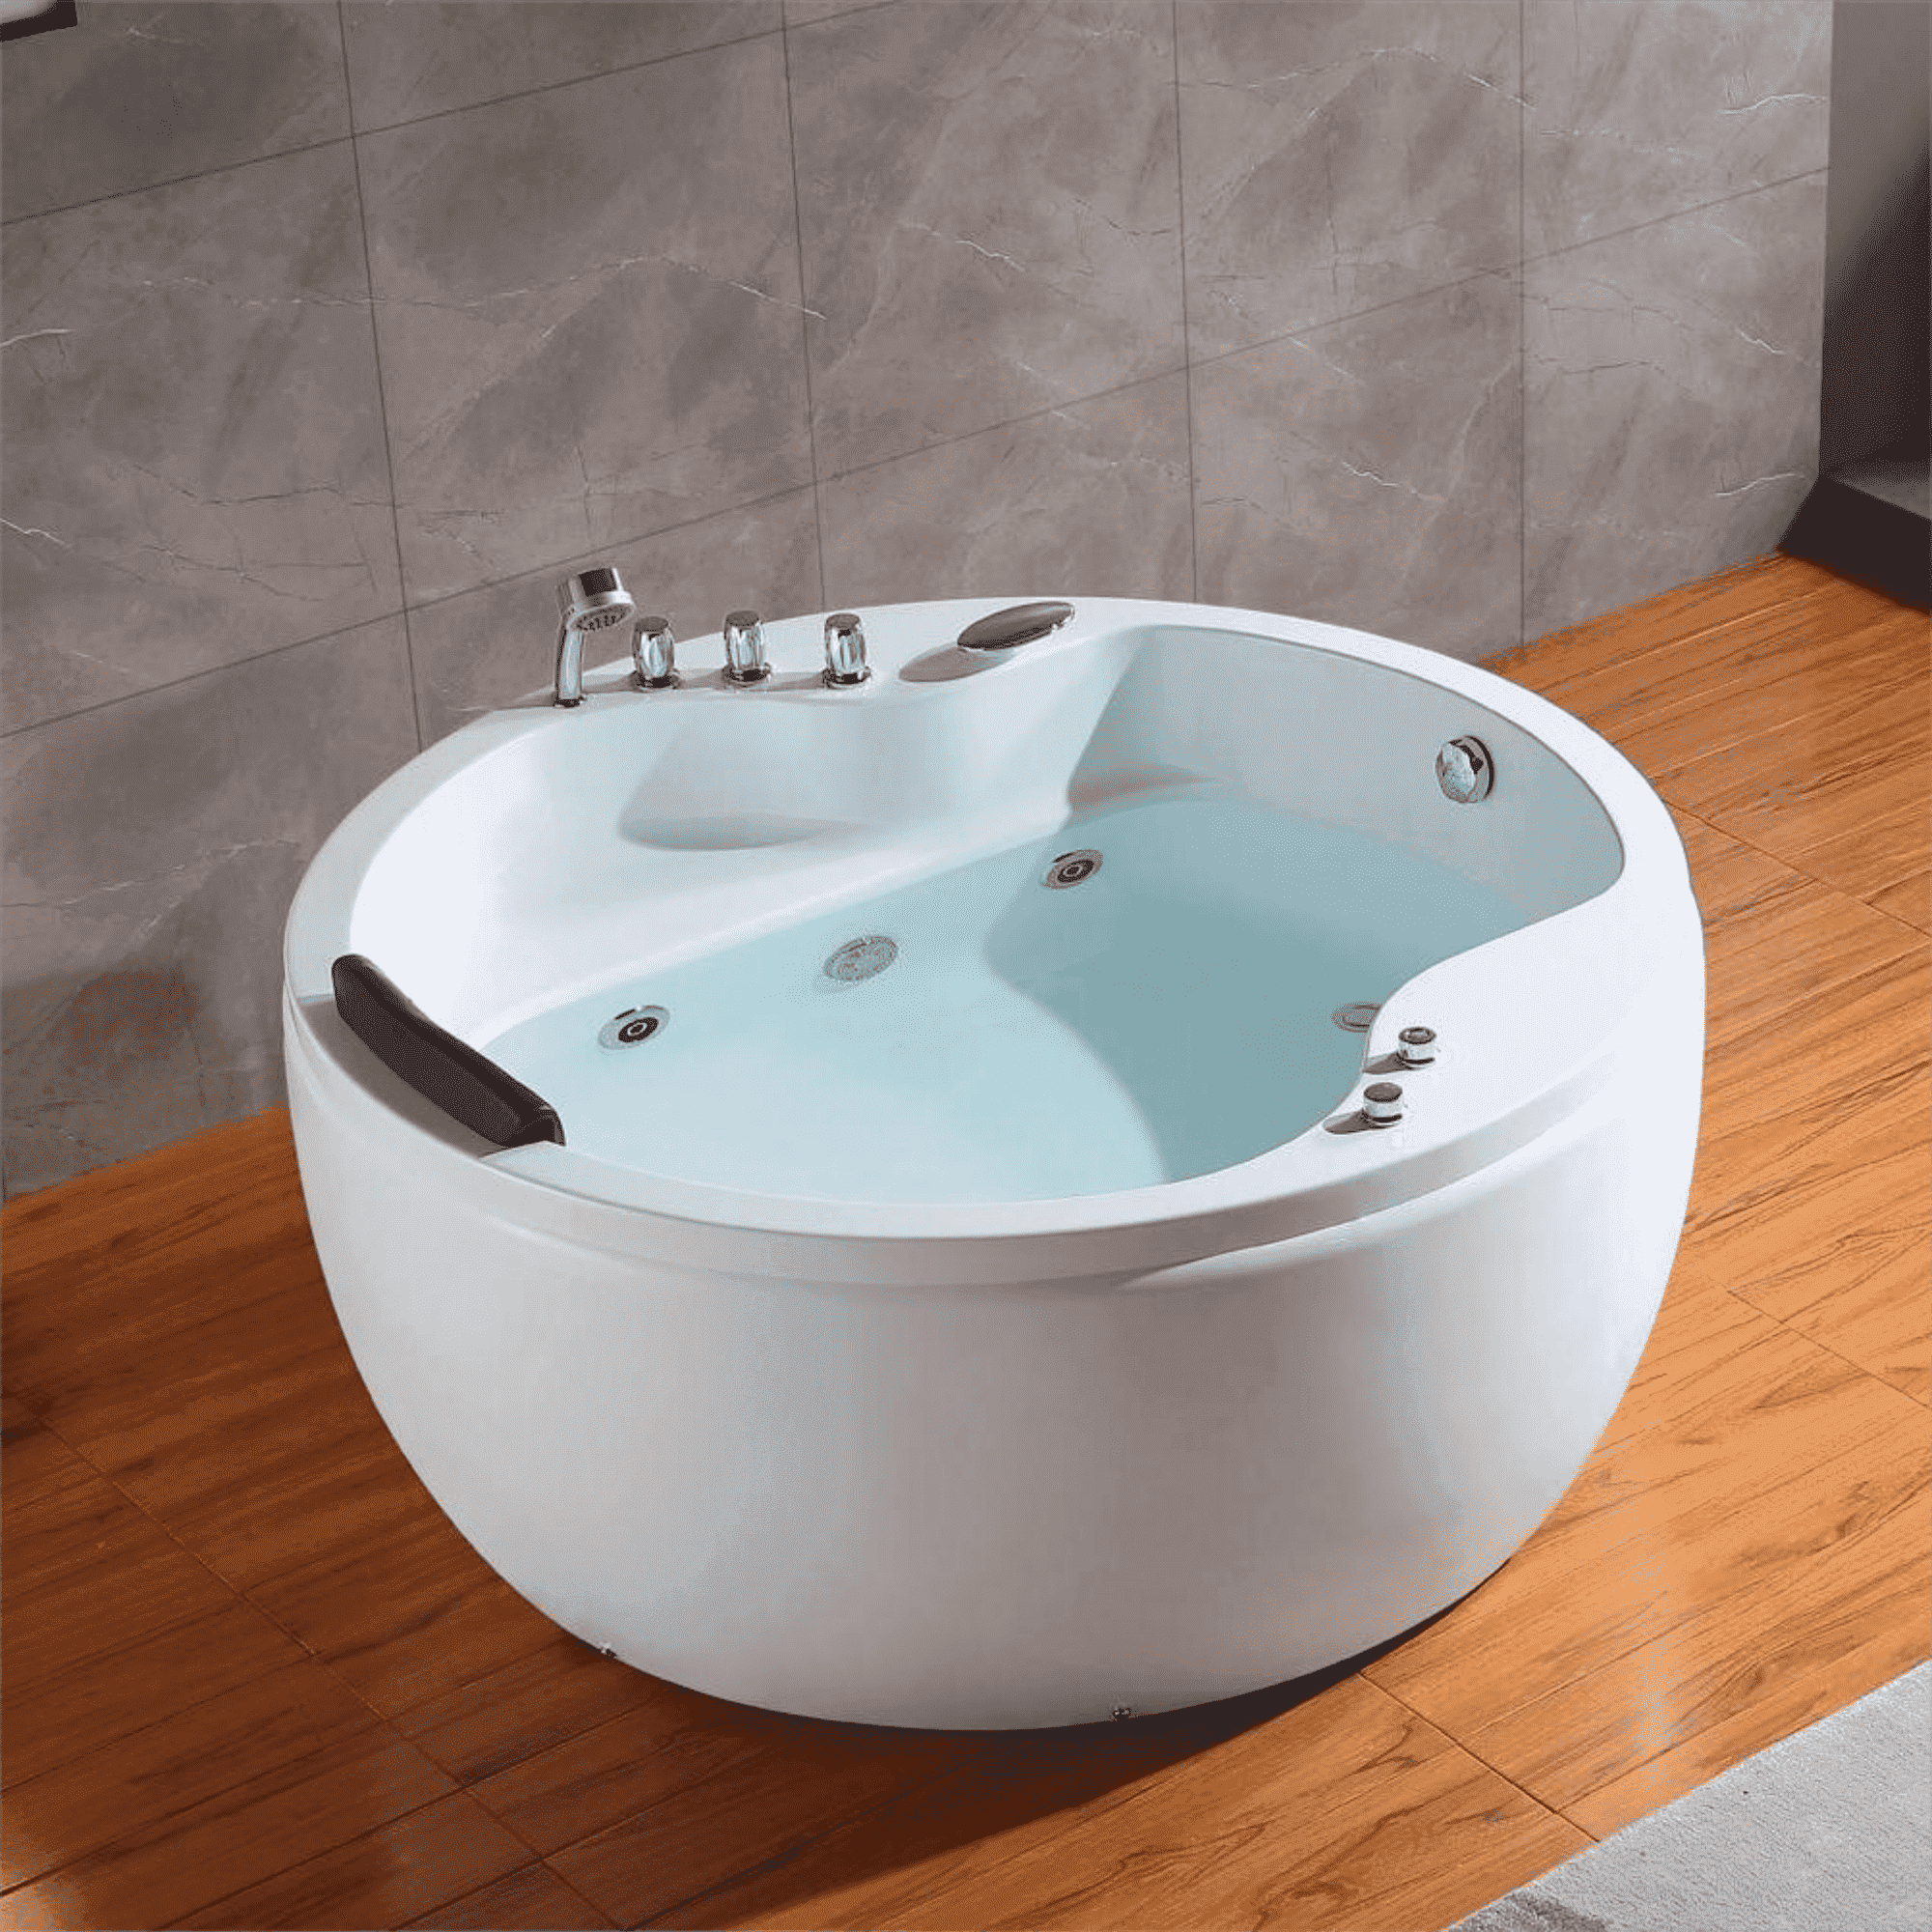 Empava-59JT005 whirlpool acrylic round modern bathtub